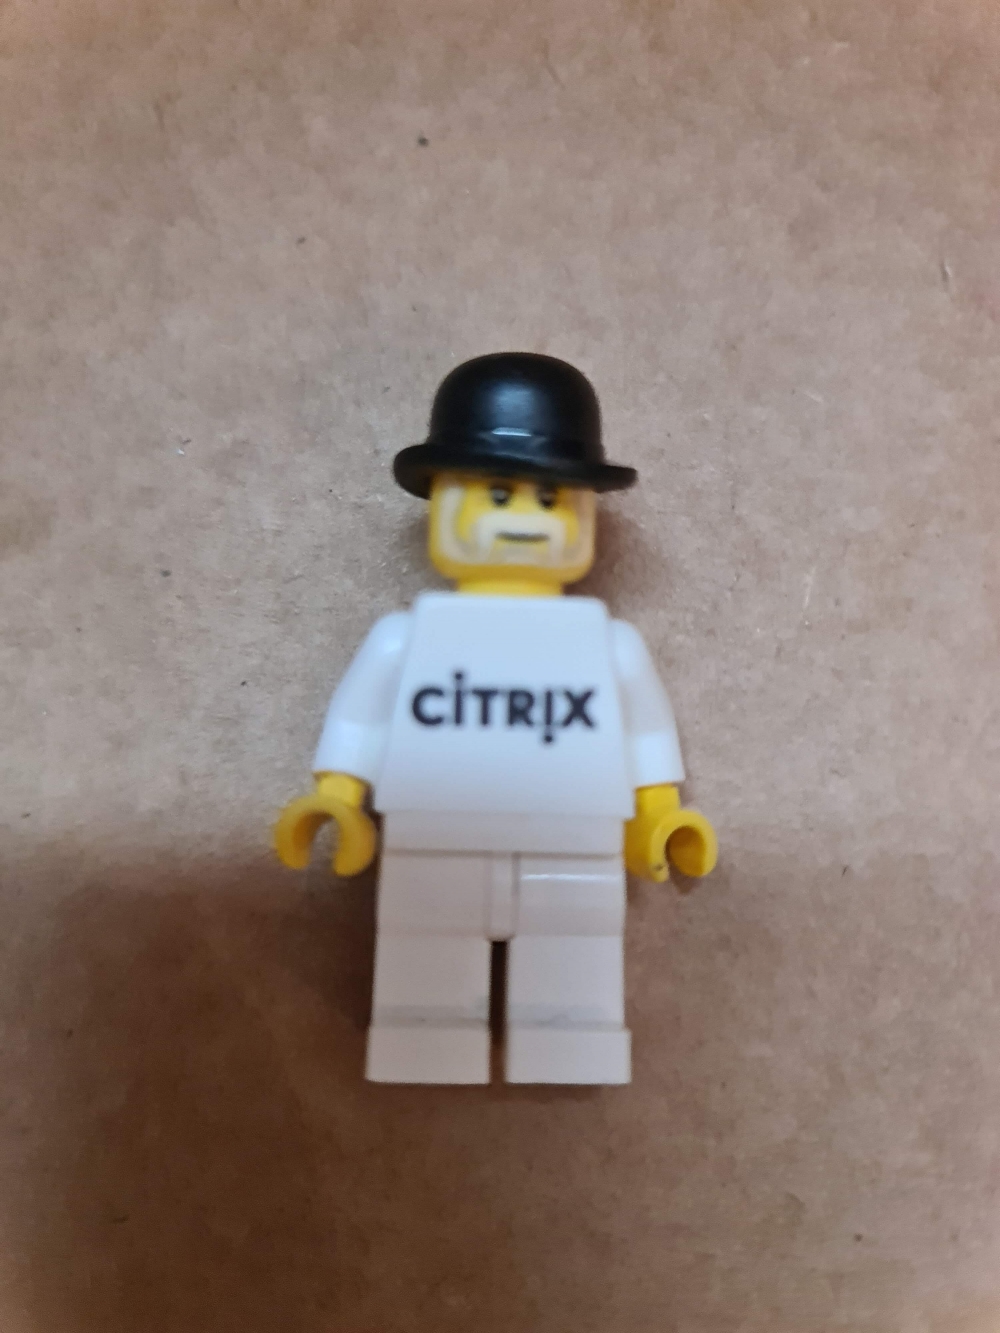 Kul promotinal Citrix minifigure. 
Sjelden figur. Gitt til Citrix ansatte ved Citrix Synergy 2016 i Las Vegas.
Perfekt stand.